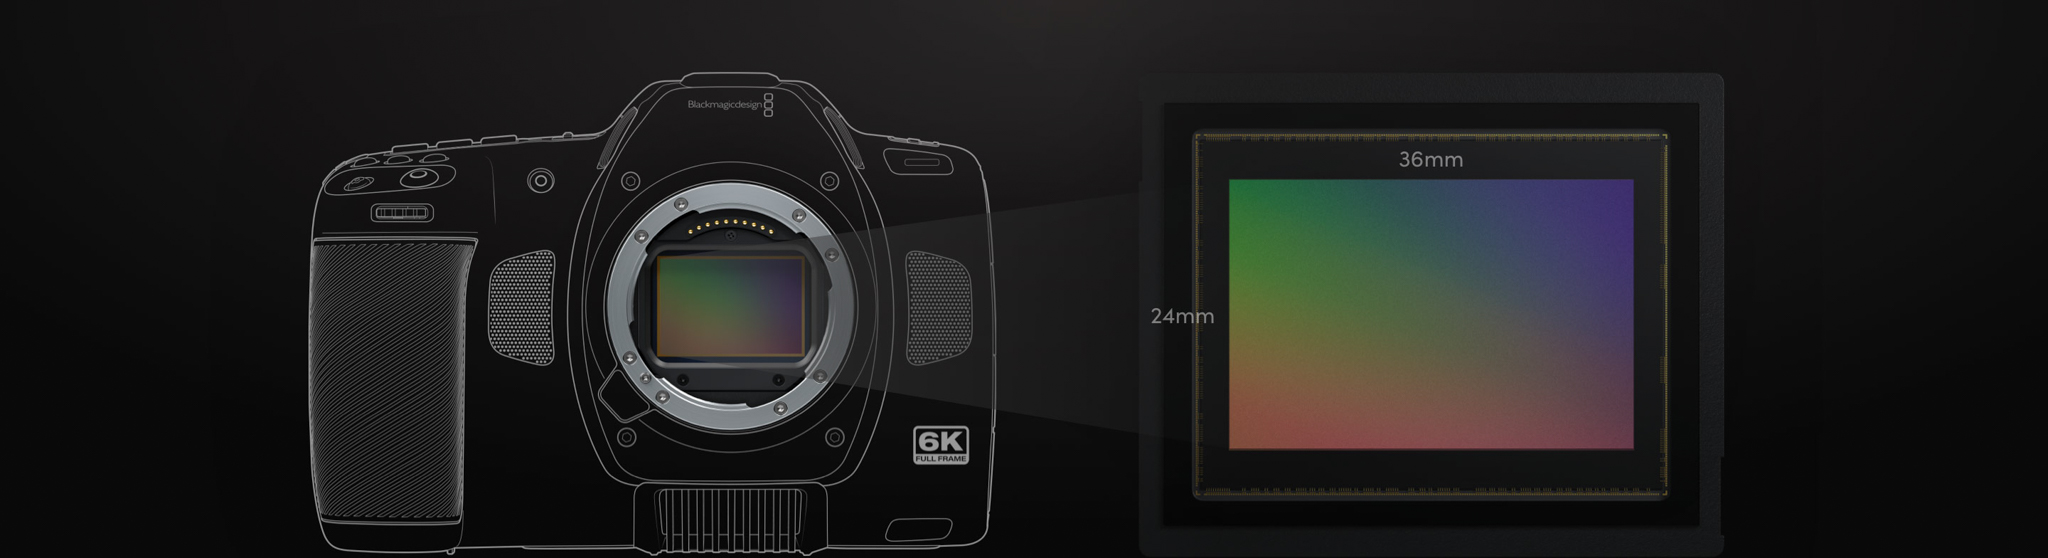 Blackmagic-Cinema-Camera-6K-tinh-te-27.jpg